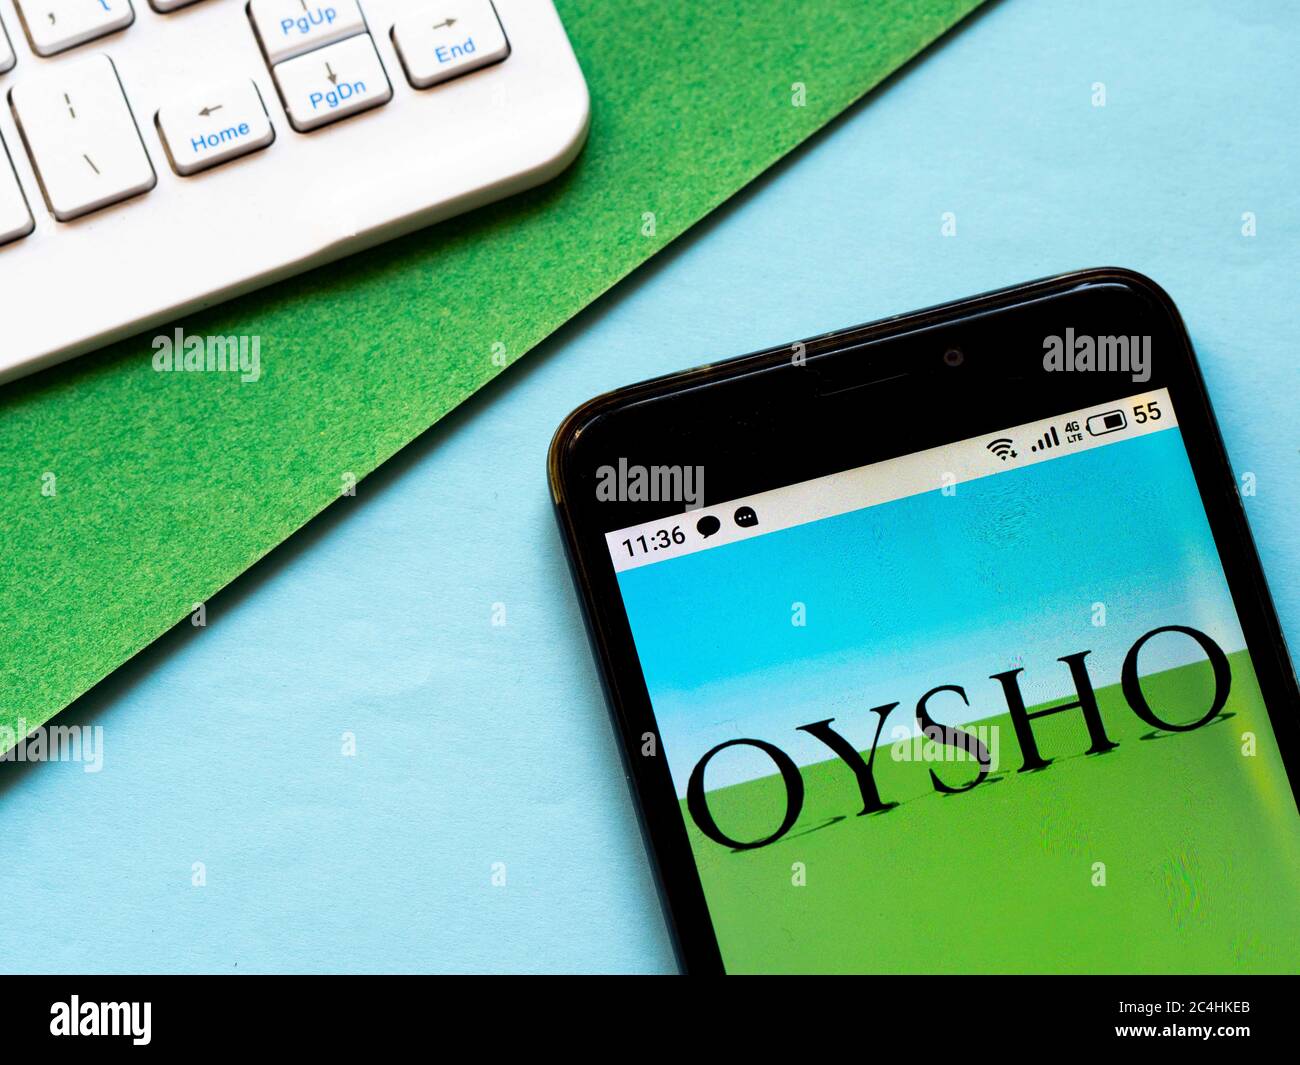 Oyshosport Projects :: Photos, videos, logos, illustrations and